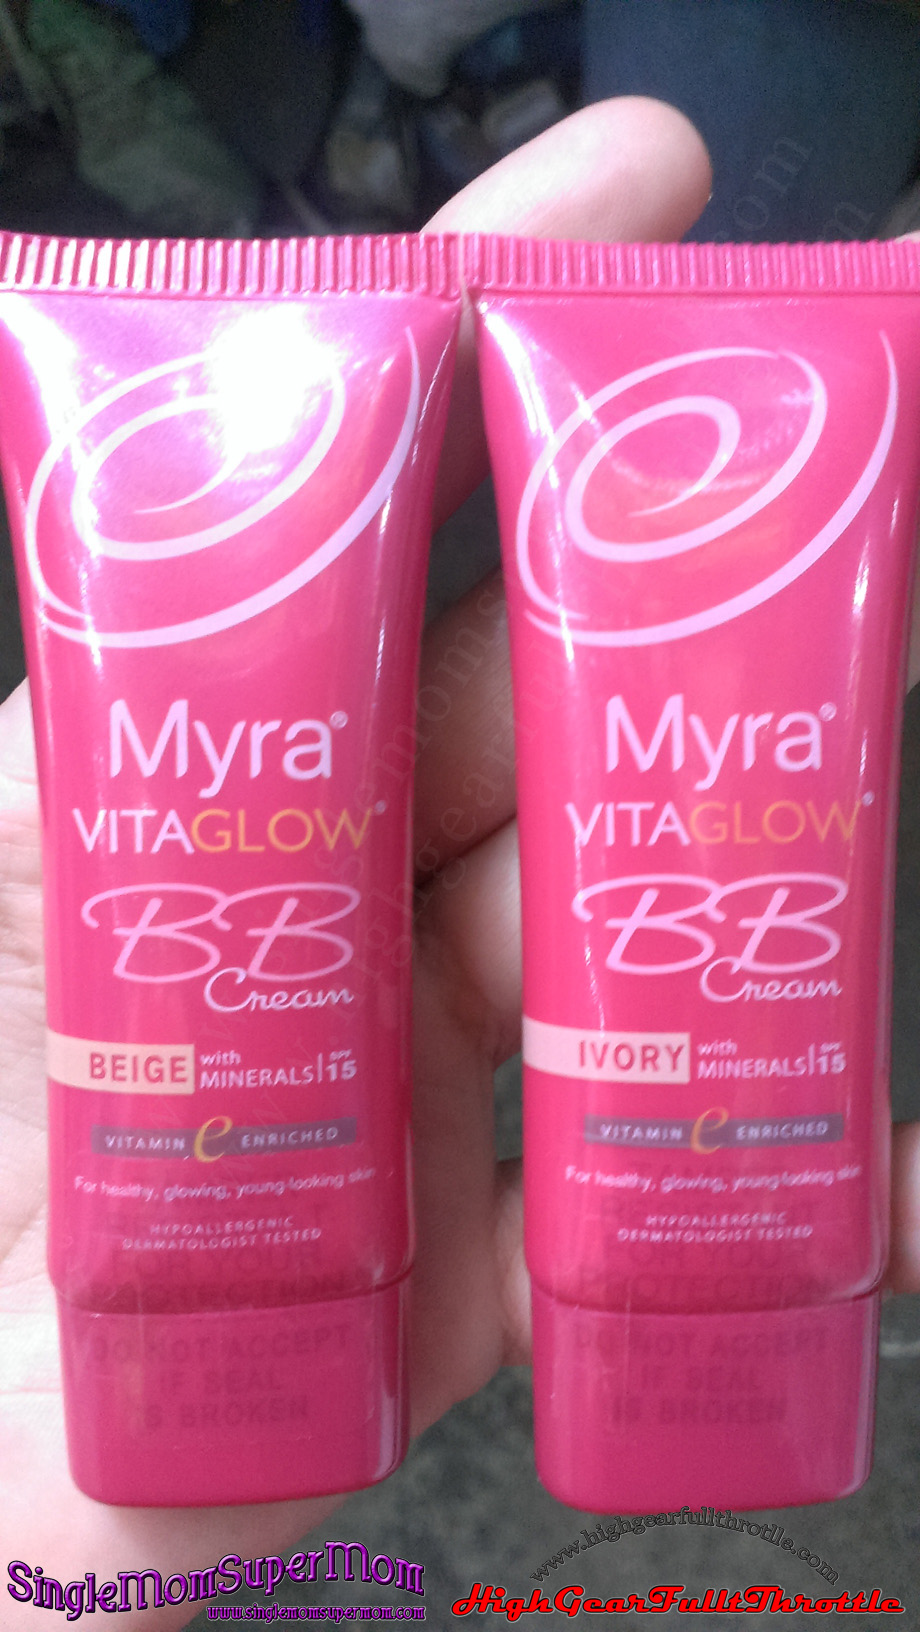 Myra VitaGlow BB Cream